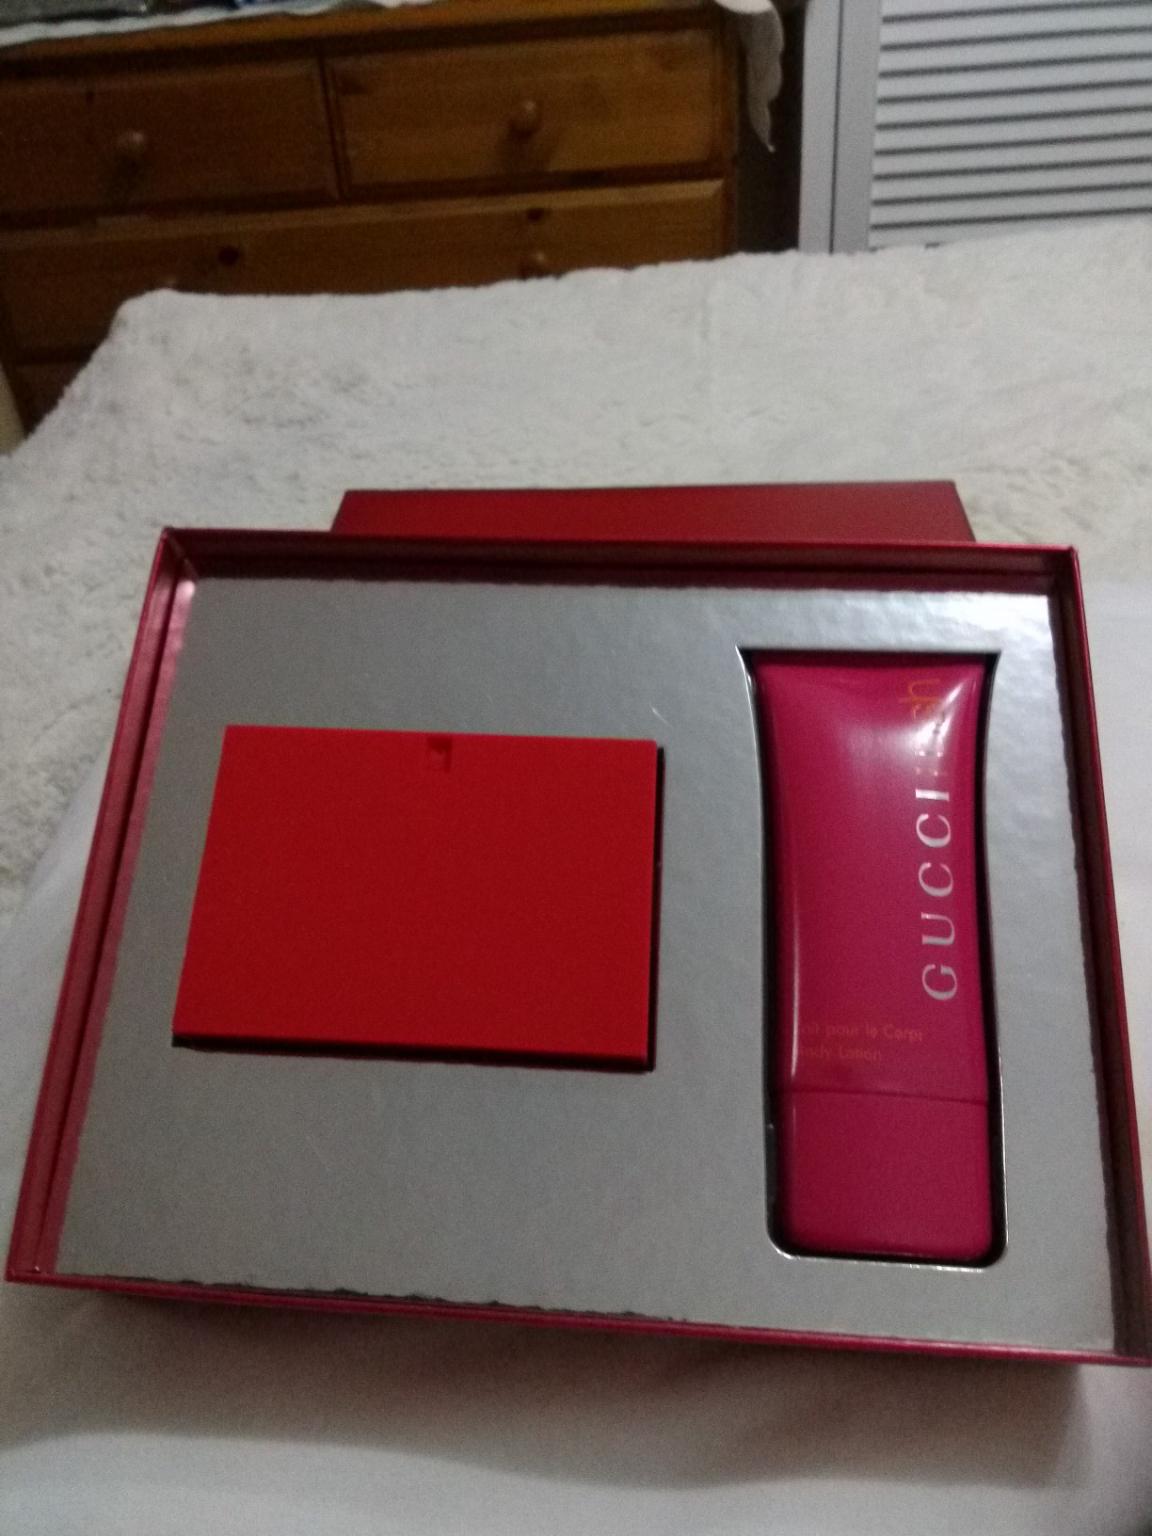 gucci rush perfume gift set